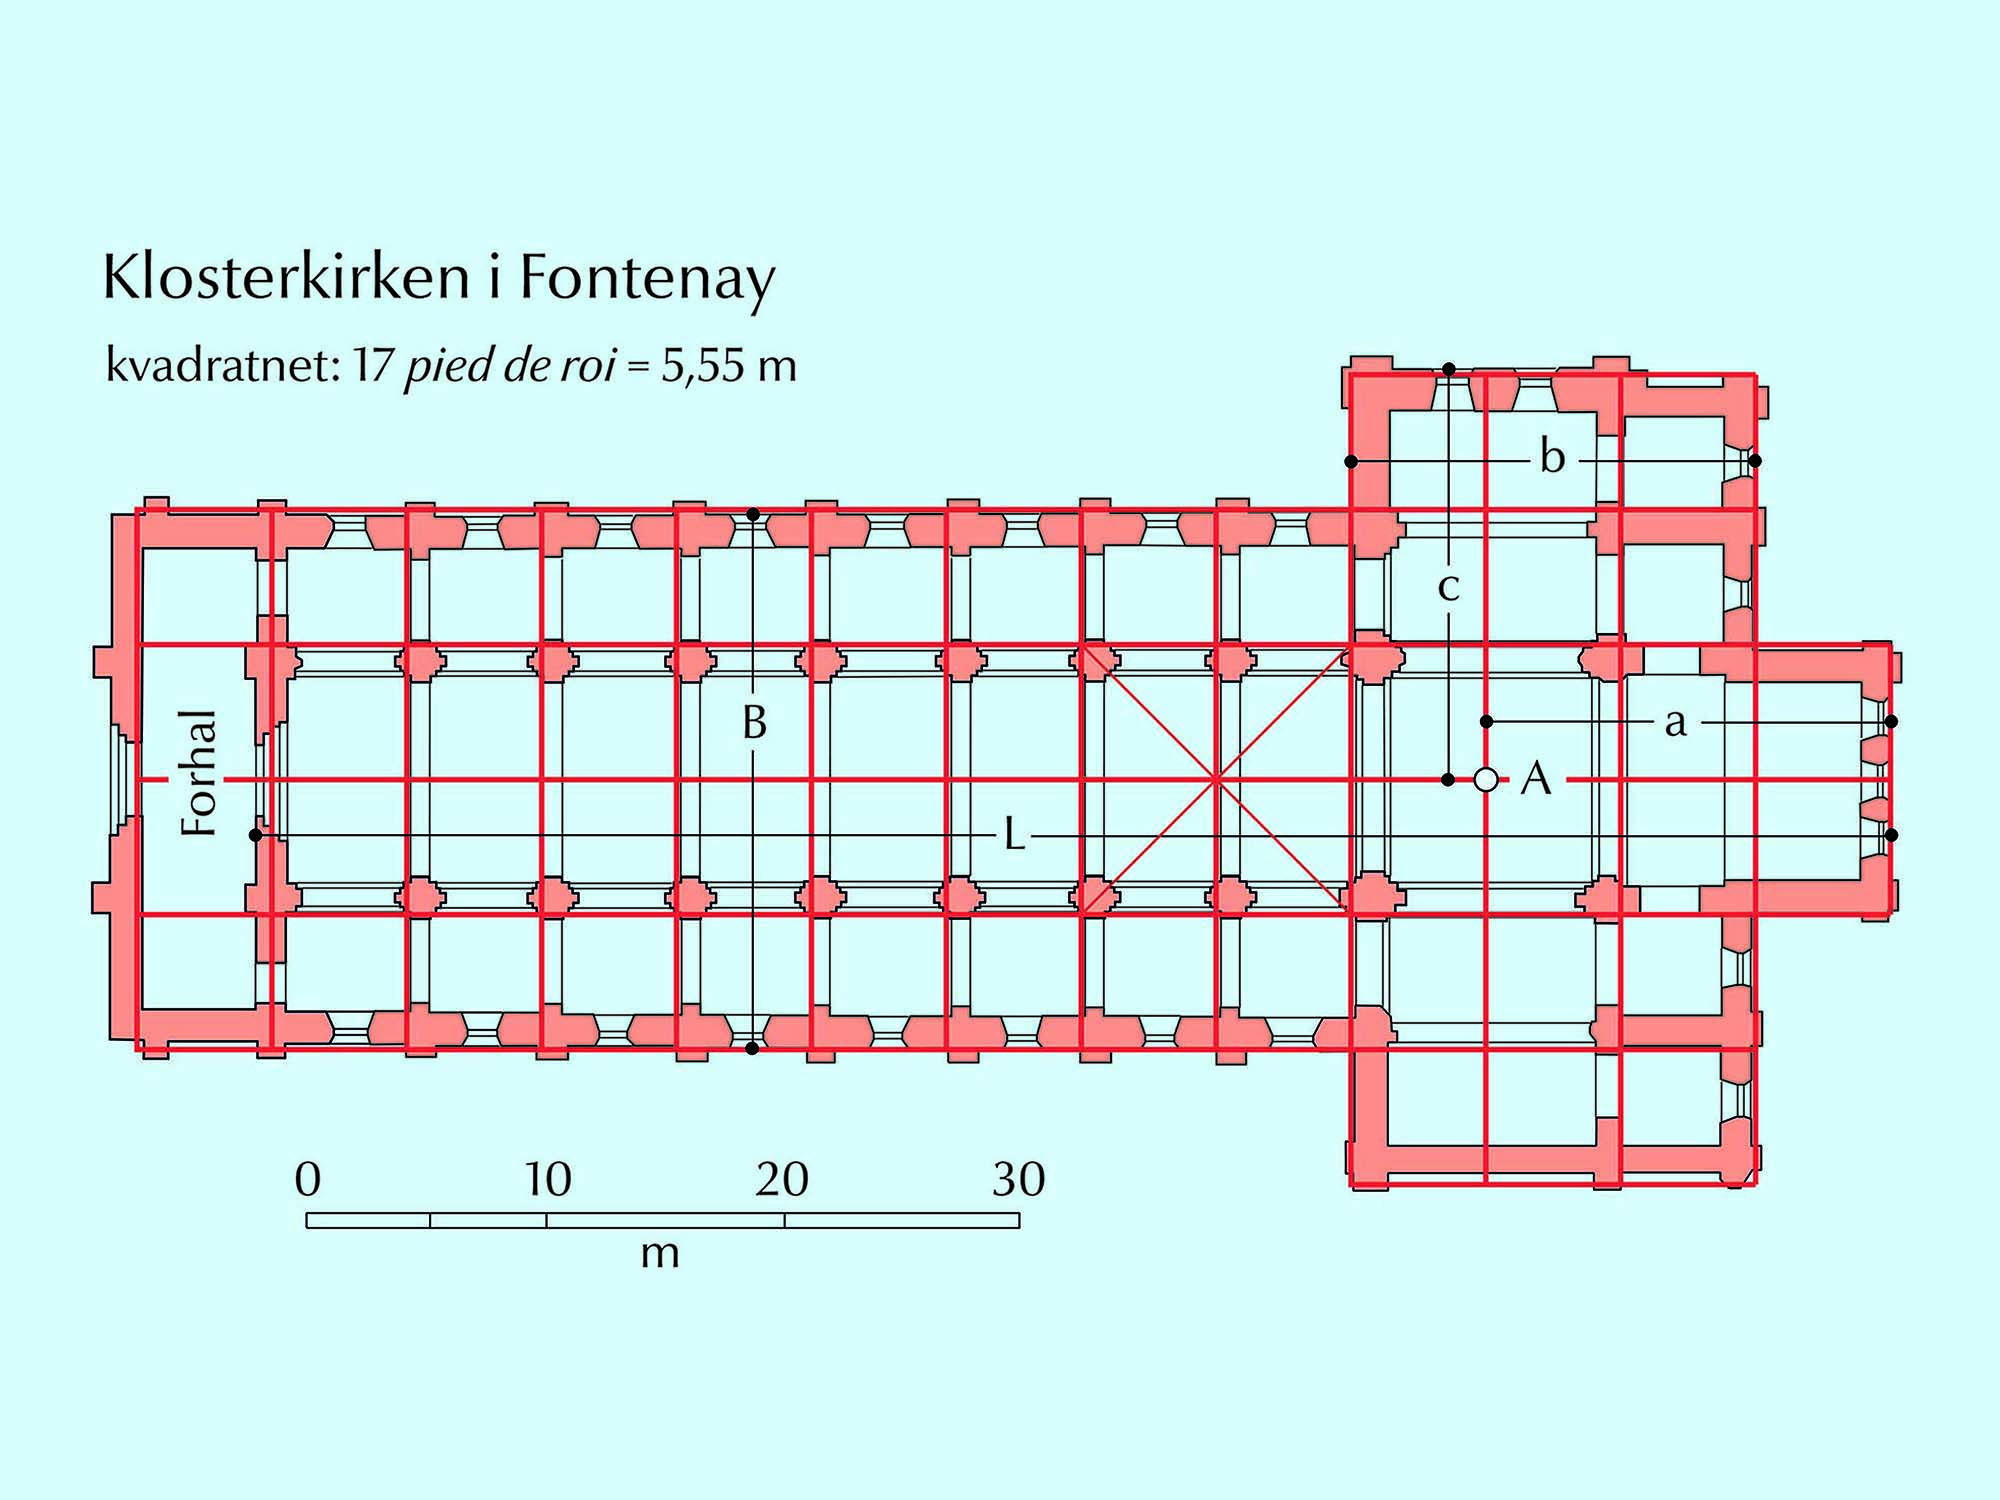 https://ankeret.net/wp-content/uploads/2019/06/Klosterkirken-i-Fontenay-grundplan.jpg